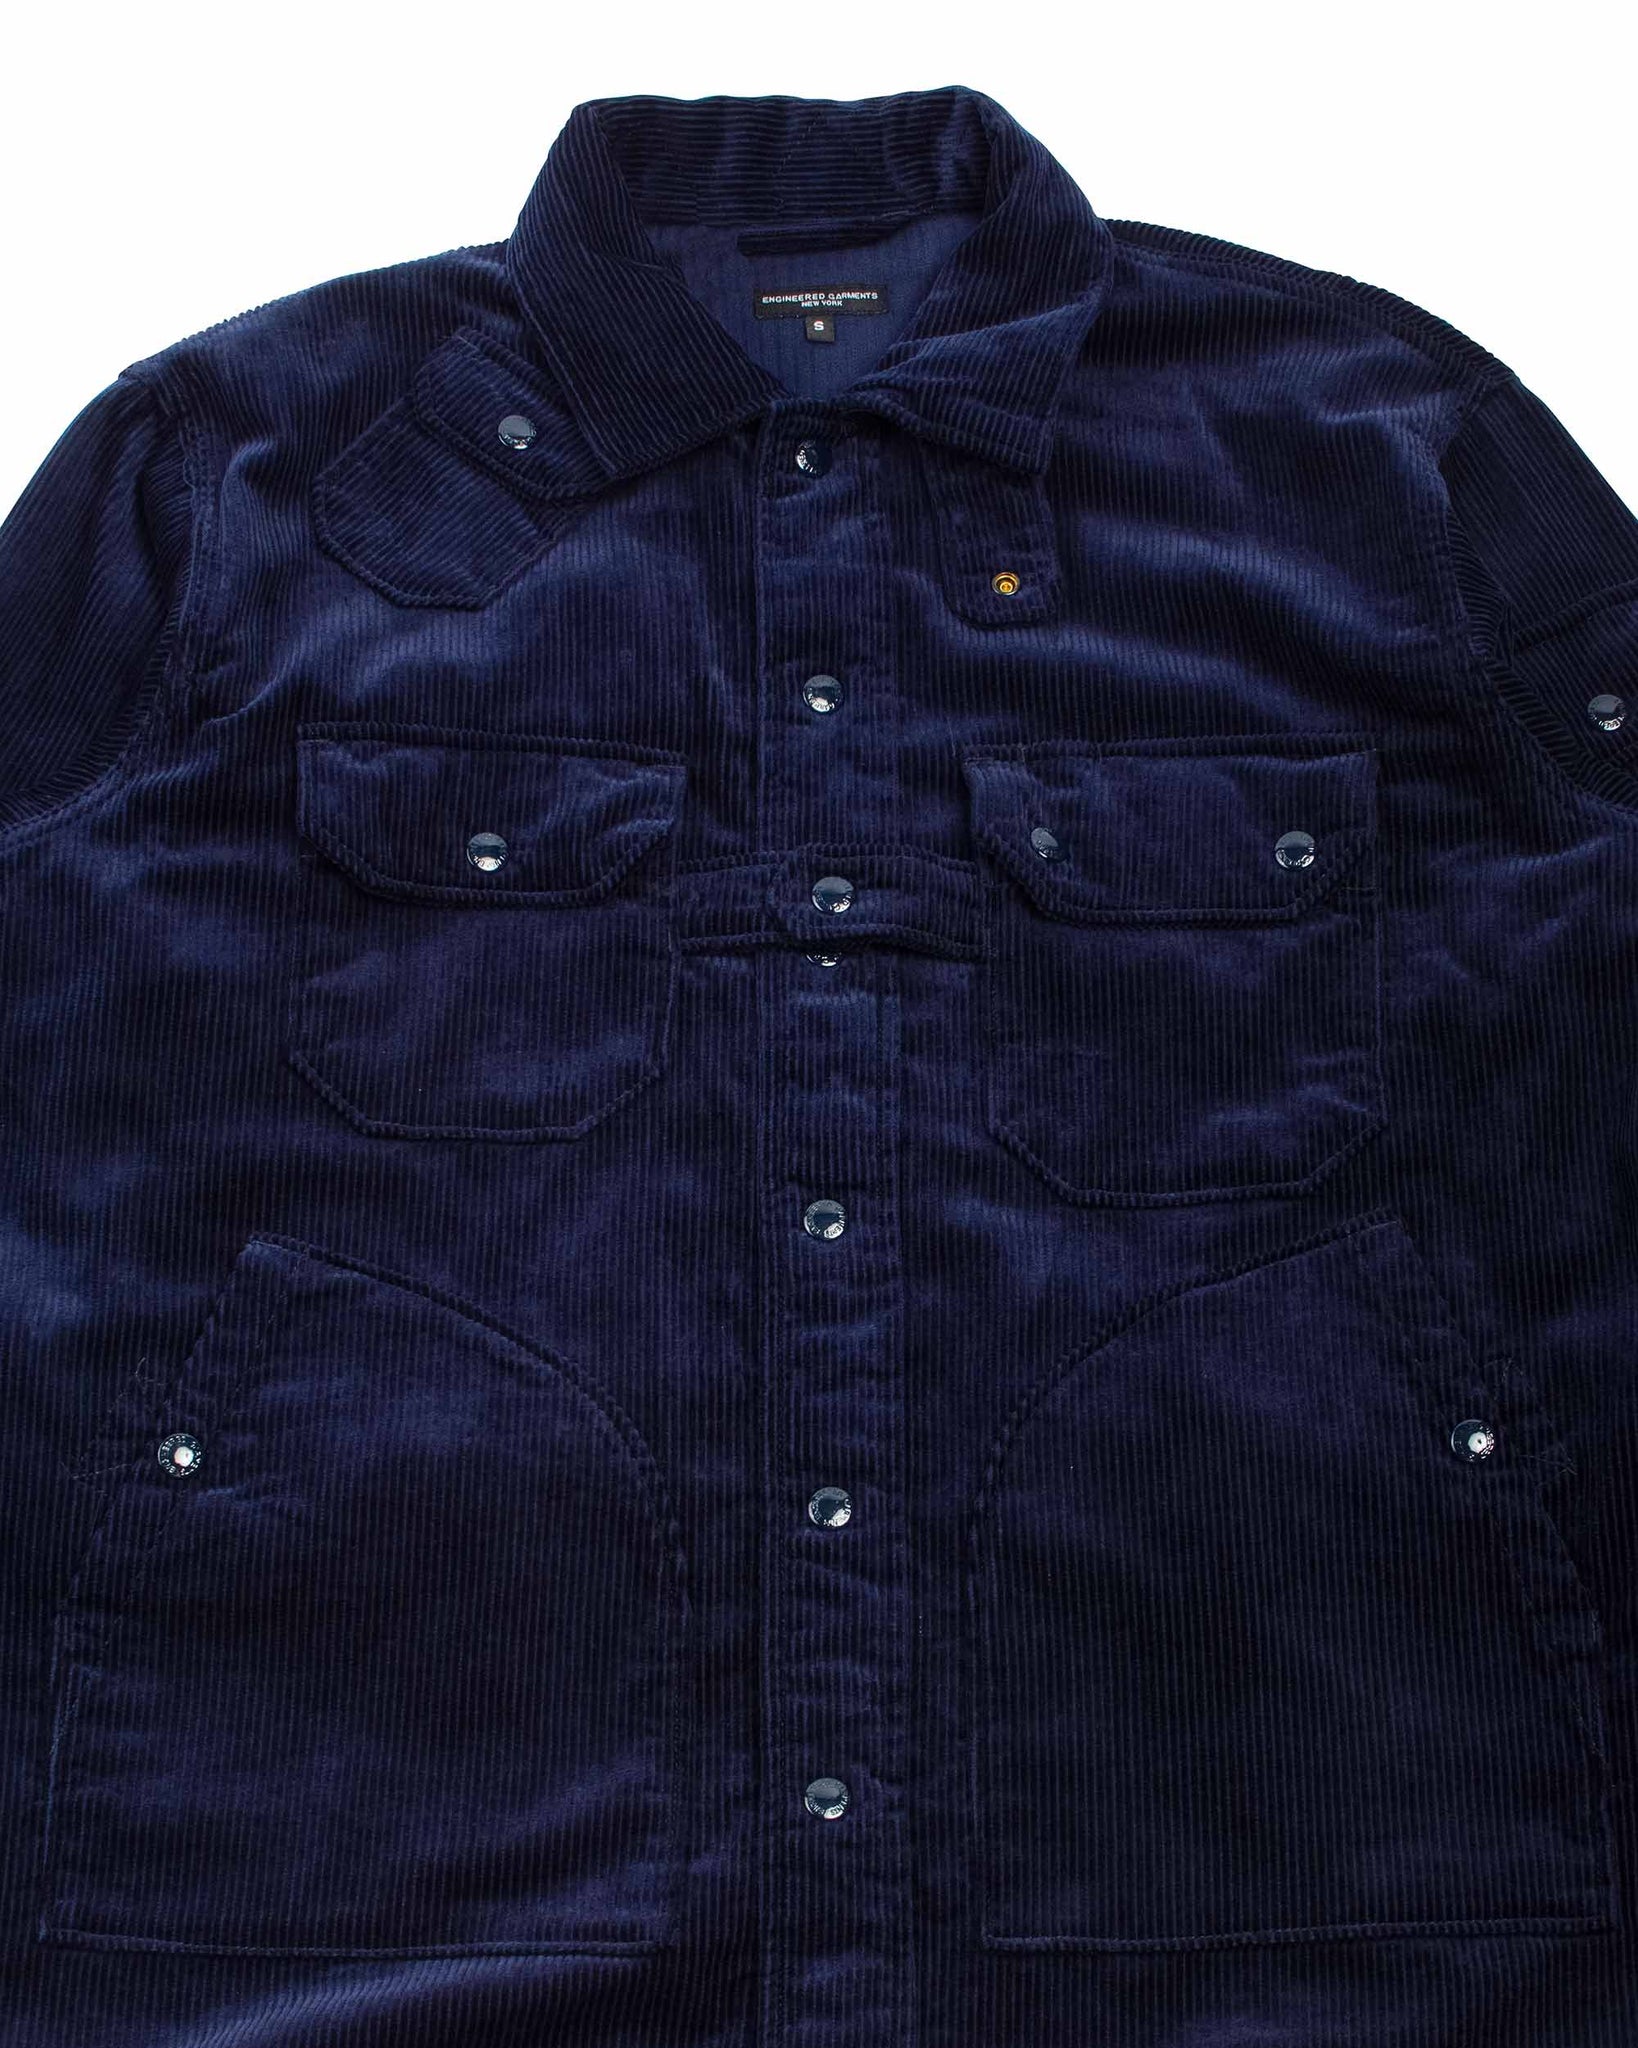 Engineered Garments Explorer Shirt Jacket Navy 8W Corduroy Details